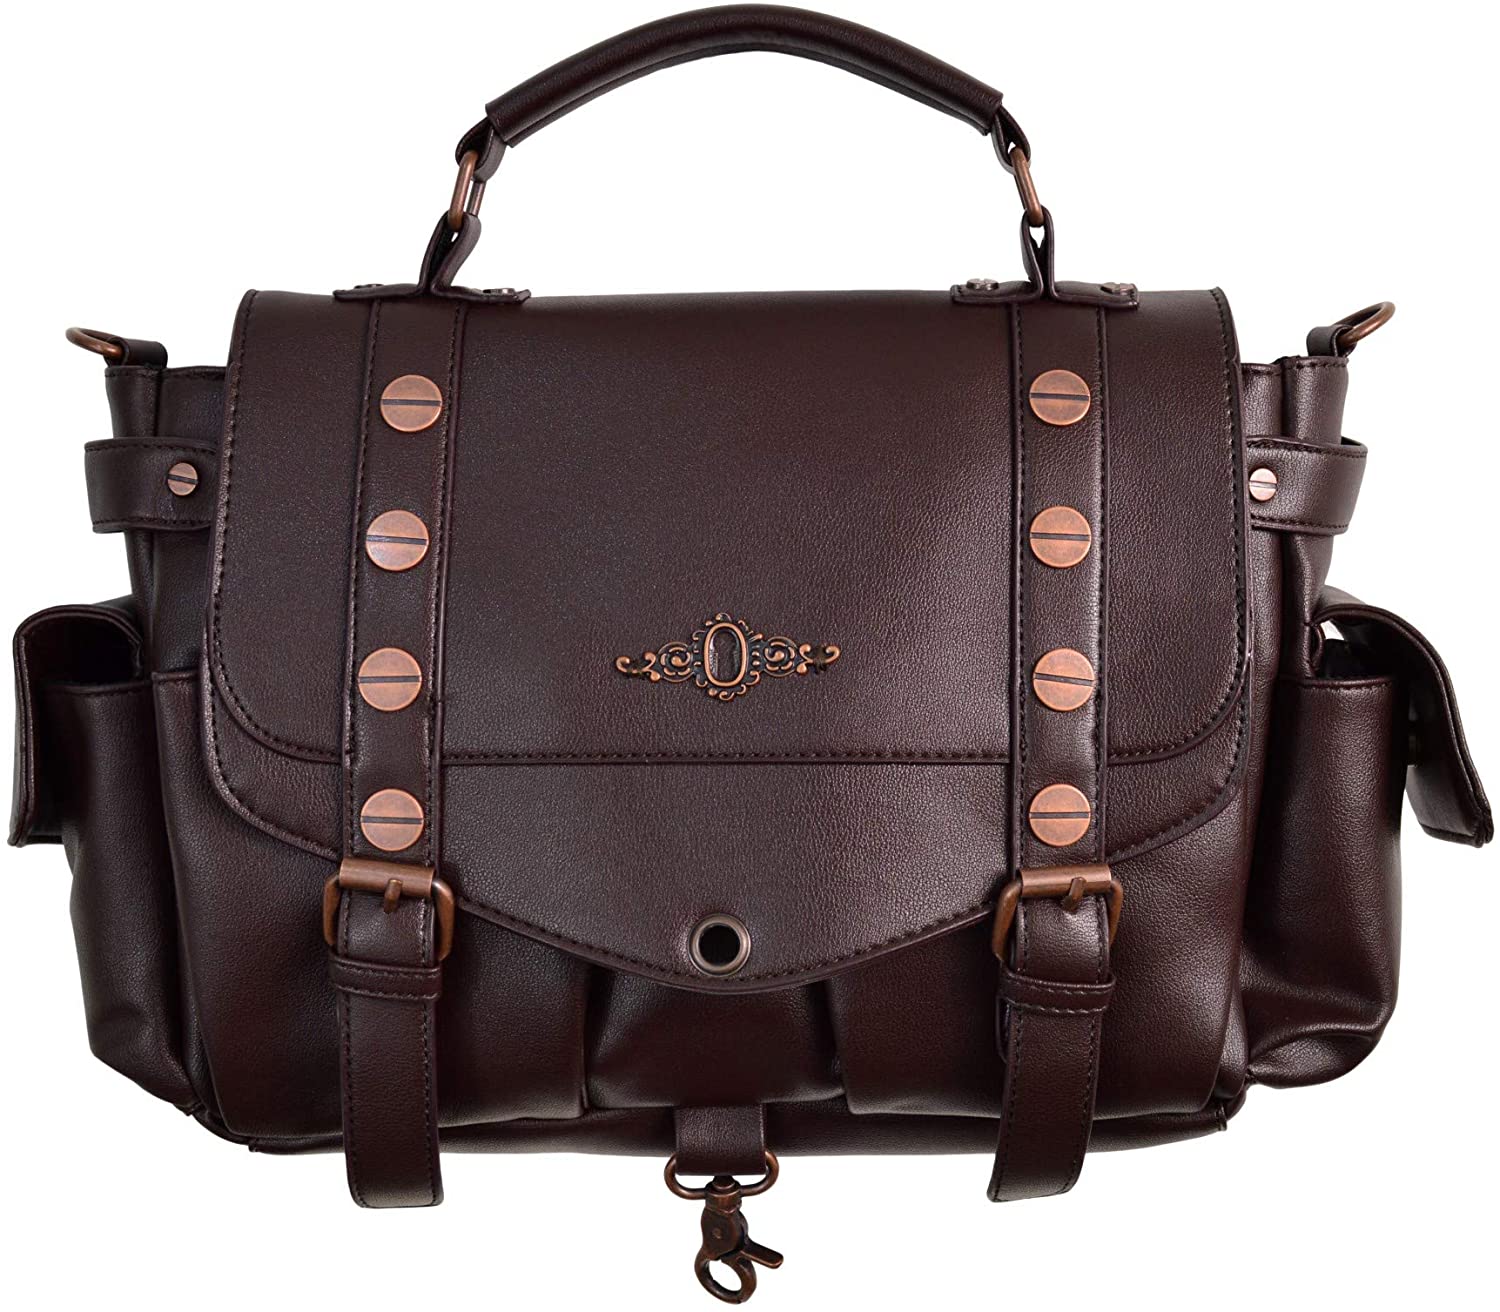 Lost Queen Brown Steampunk Handbag With Copper Details